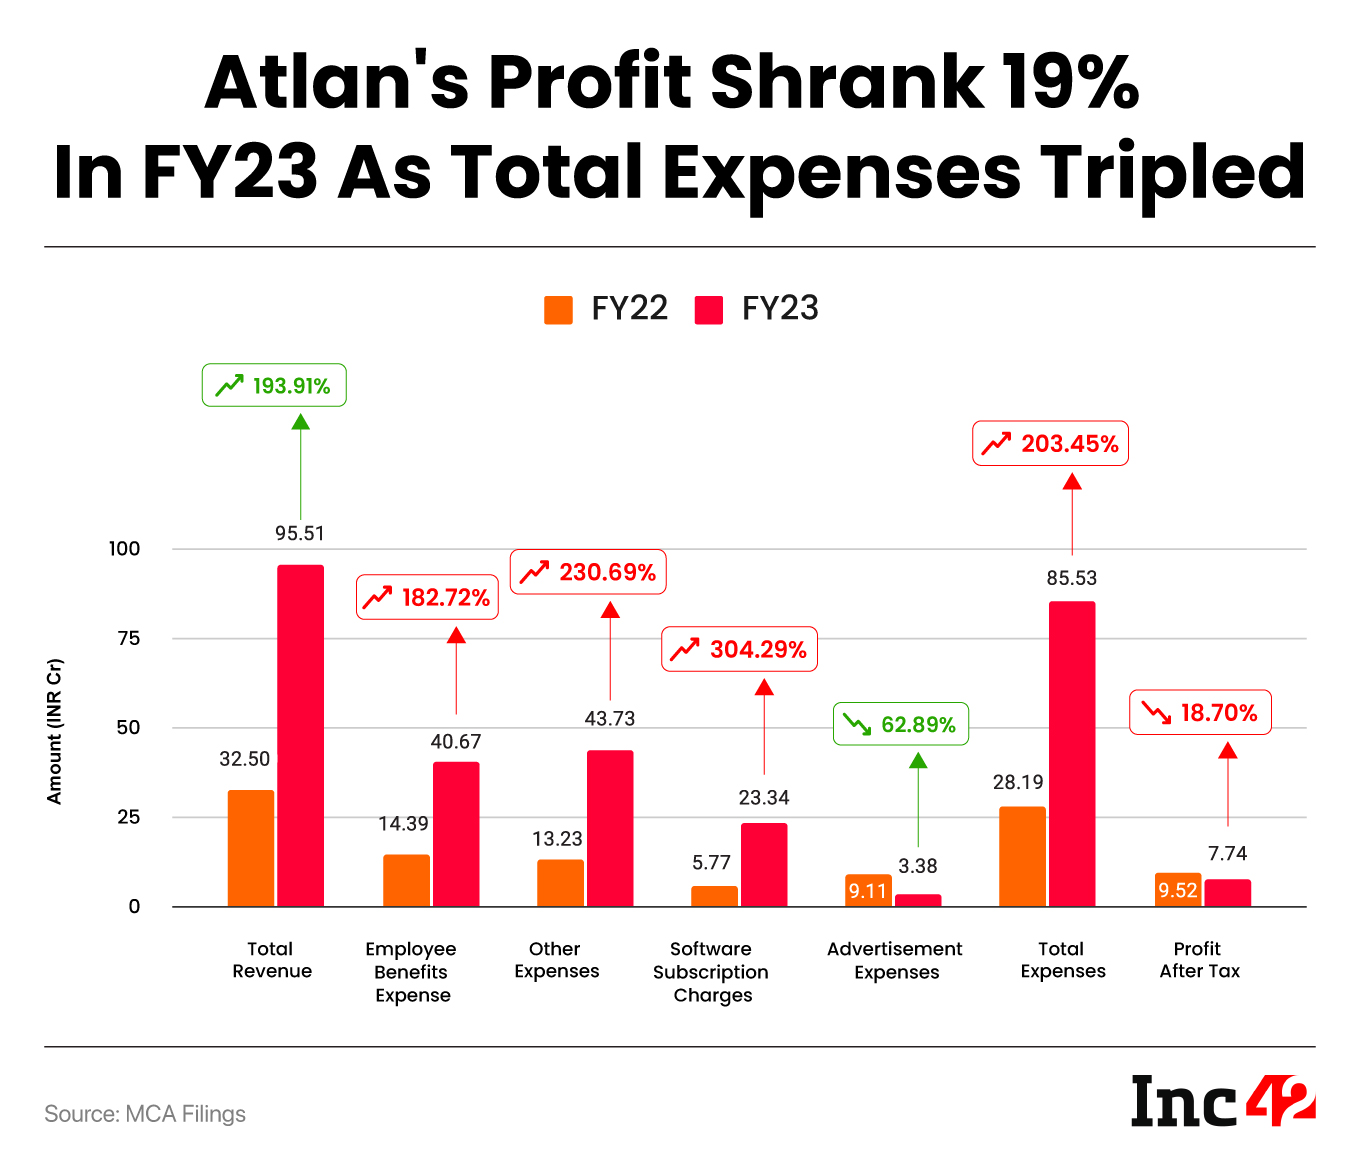 SaaS Startup Atlan’s Profit Slips 19% To INR 7.74 Cr In FY23